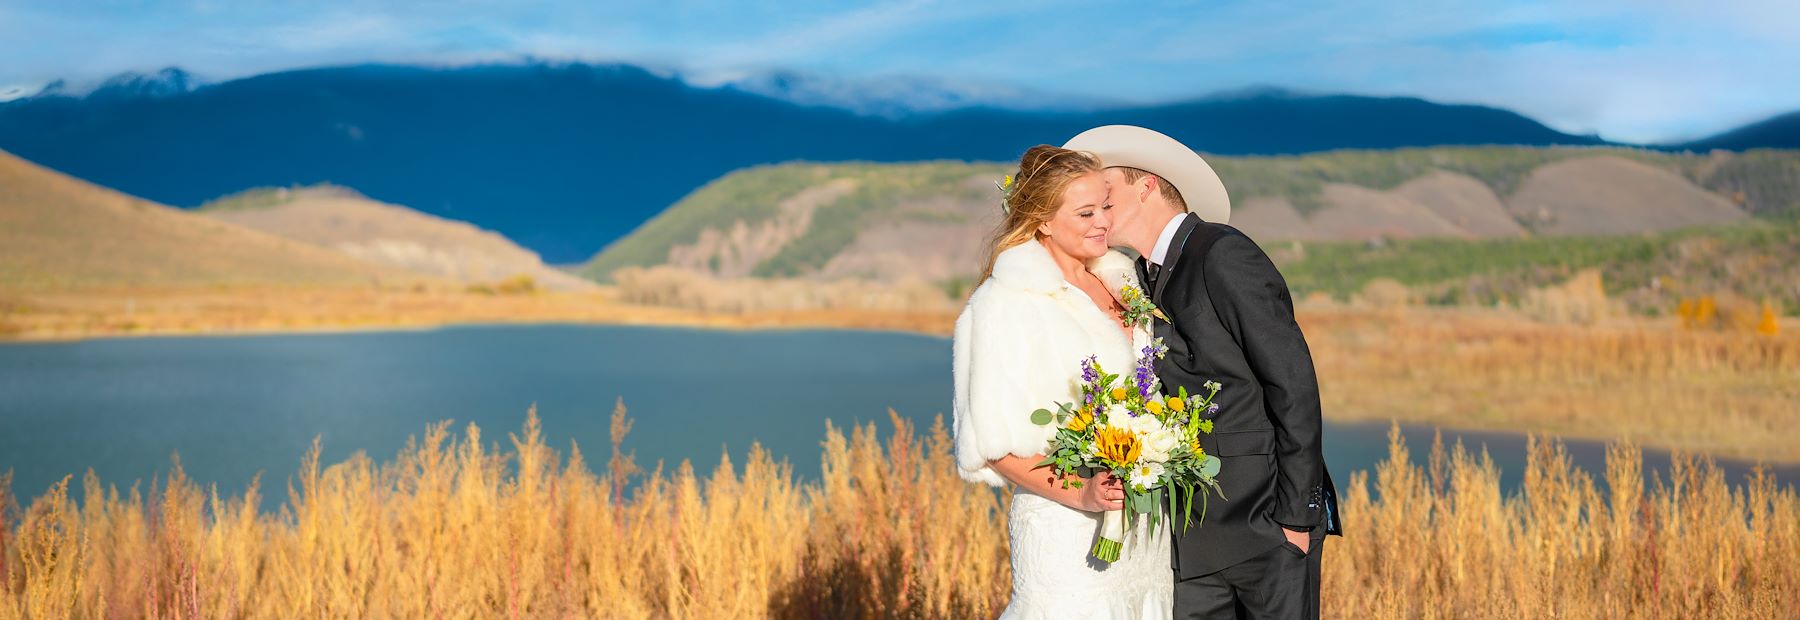 Sun Outdoors Rocky Mountains Weddings